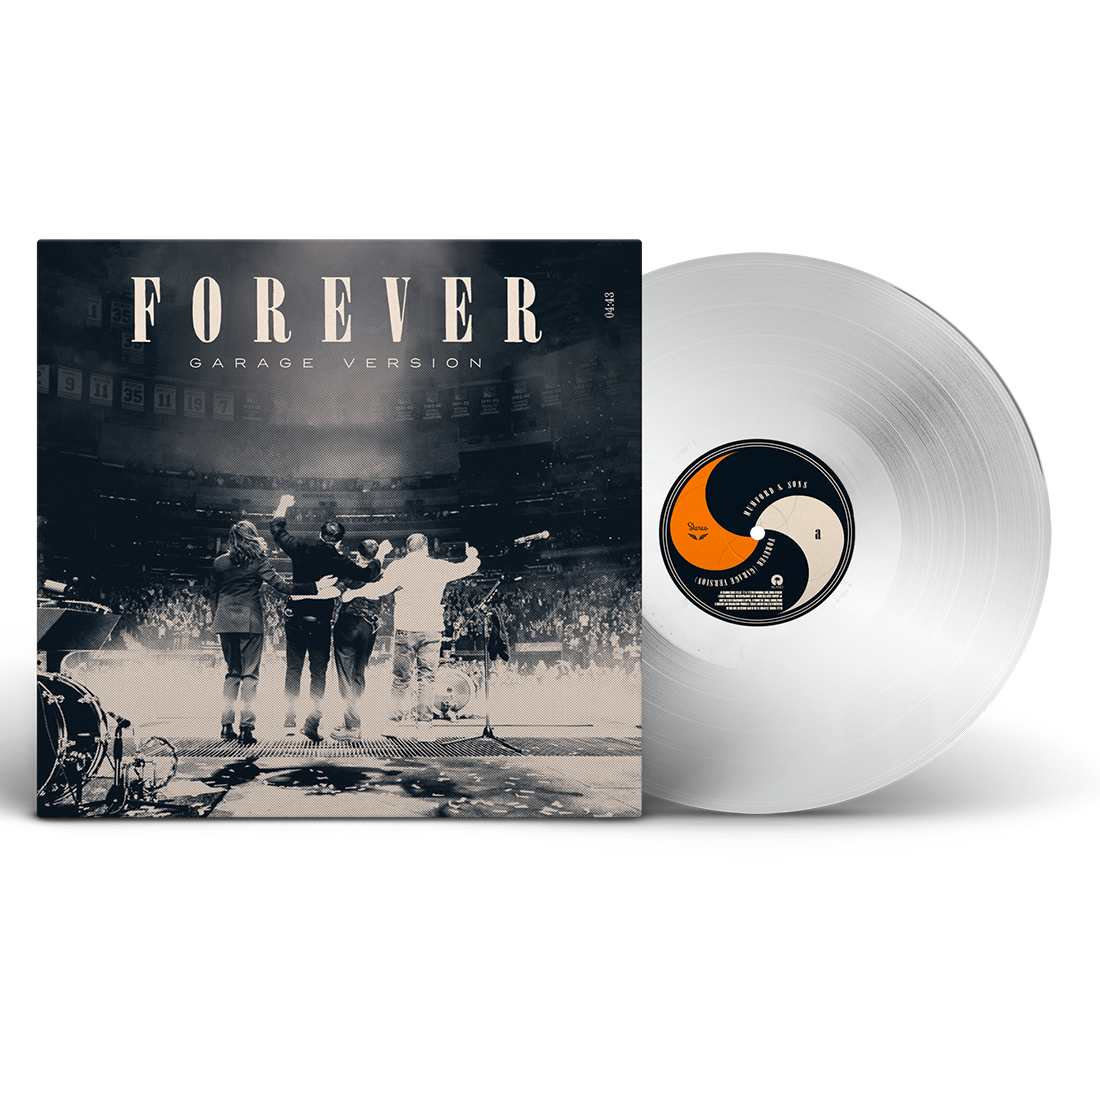 Mumford & Sons  - Forever (Garage Version): Limited White Vinyl 7” Single